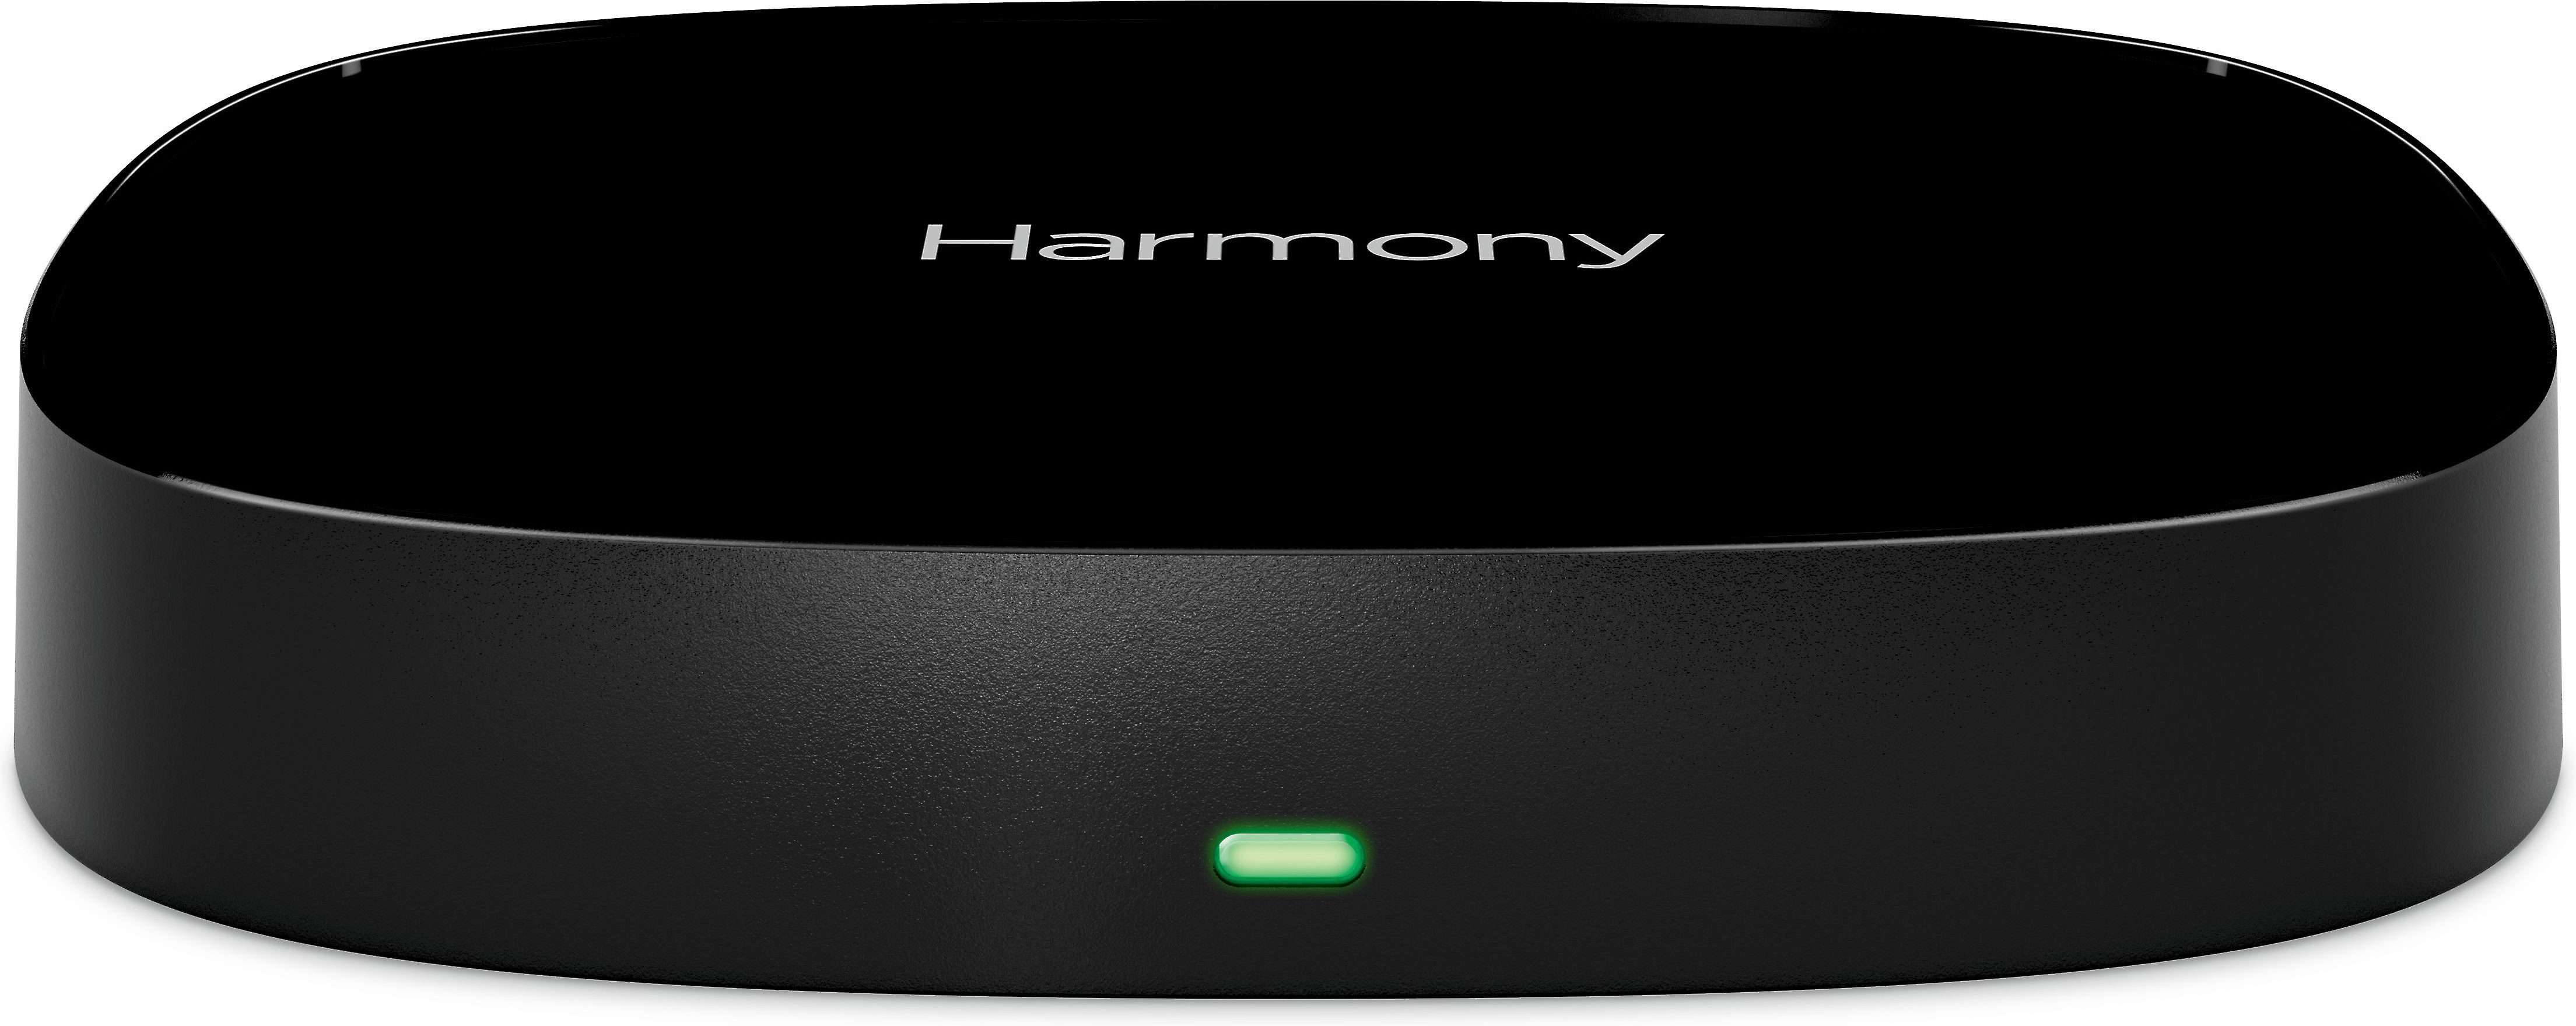 logitech harmony hub remote